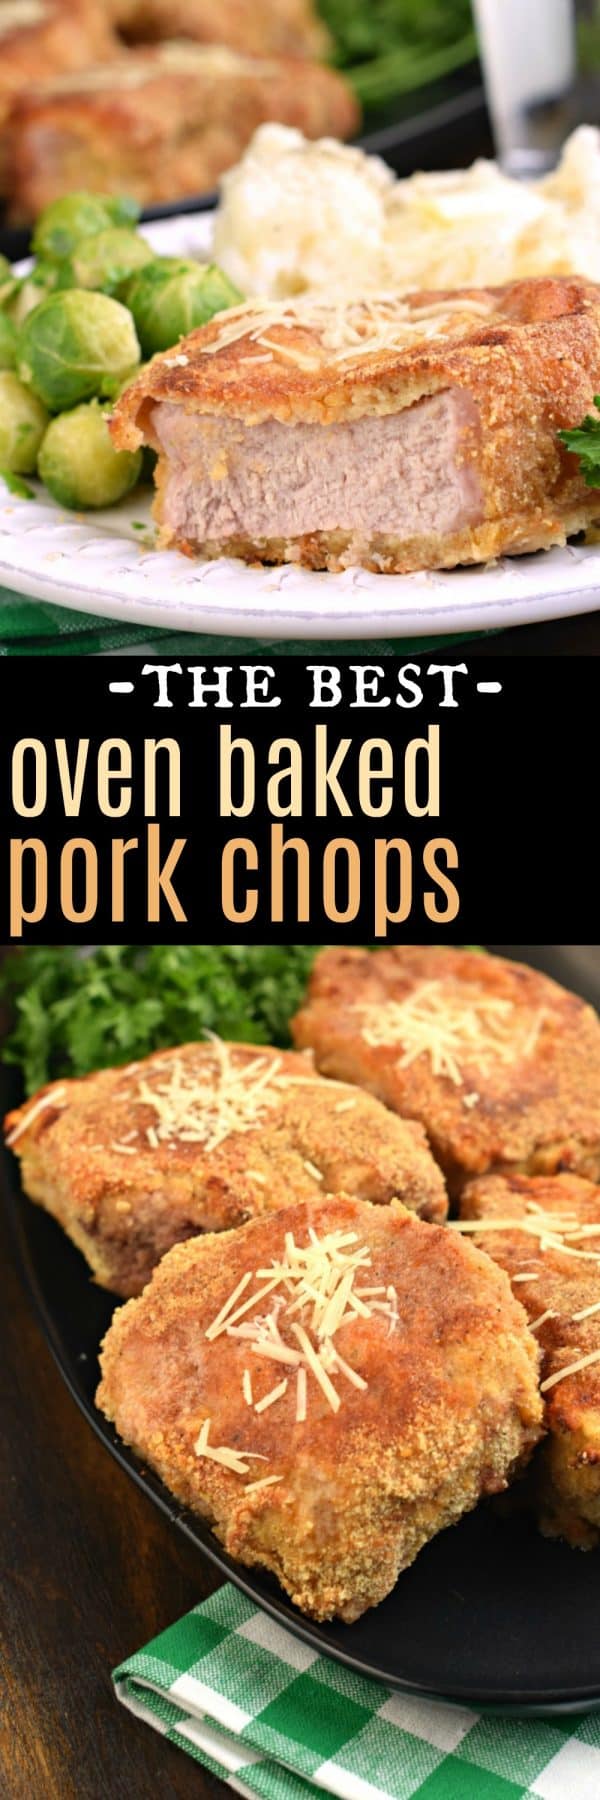 The Best Parmesan Oven Baked Pork Chops Recipe